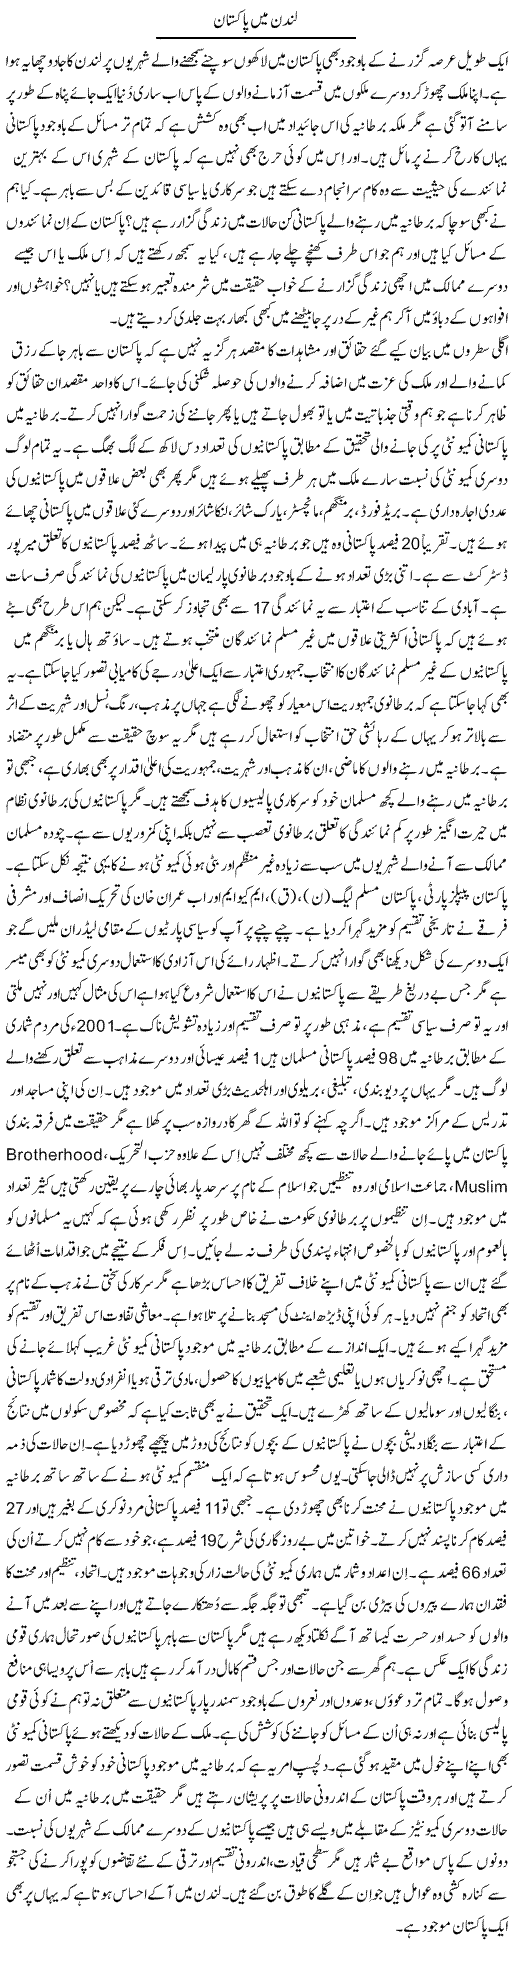 London mai Pakistan Express Column Talat Hussain 30 jan 2010